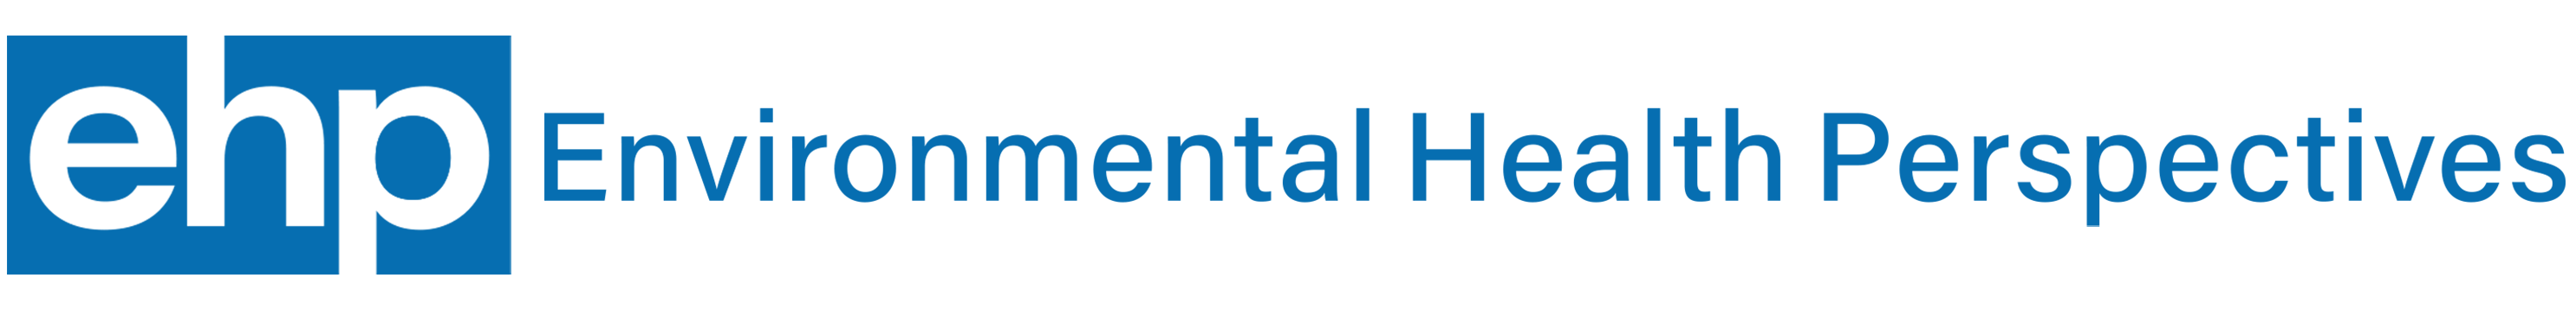 NIEHS Logo - Environmental Health Perspectives